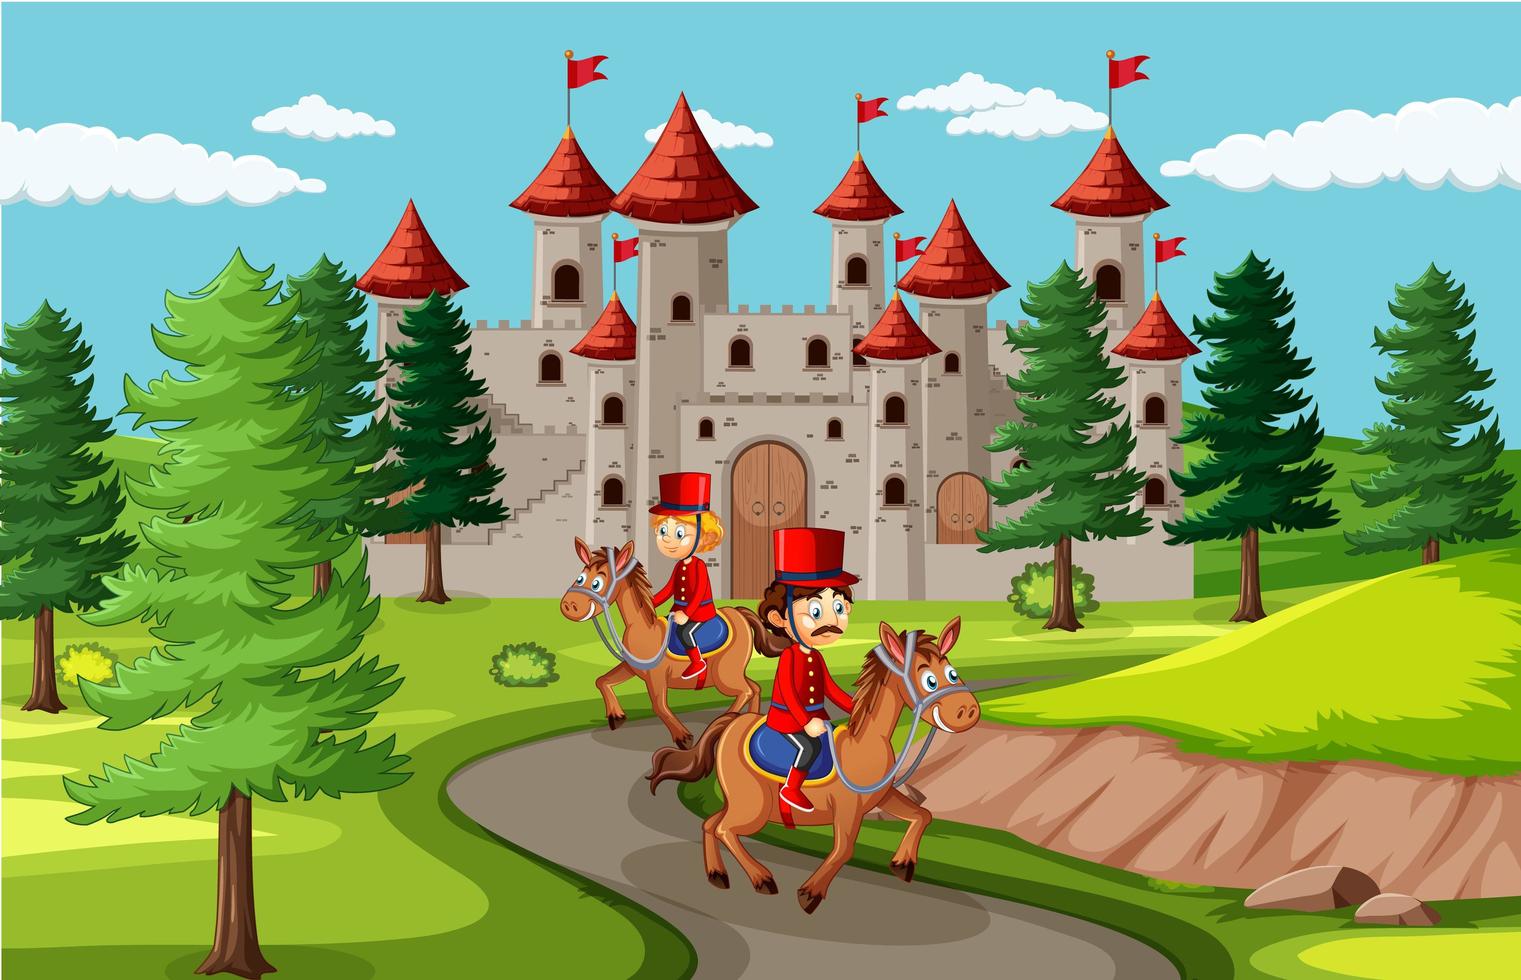 Märchenszene mit Schloss und Soldat Royal Guard Szene vektor